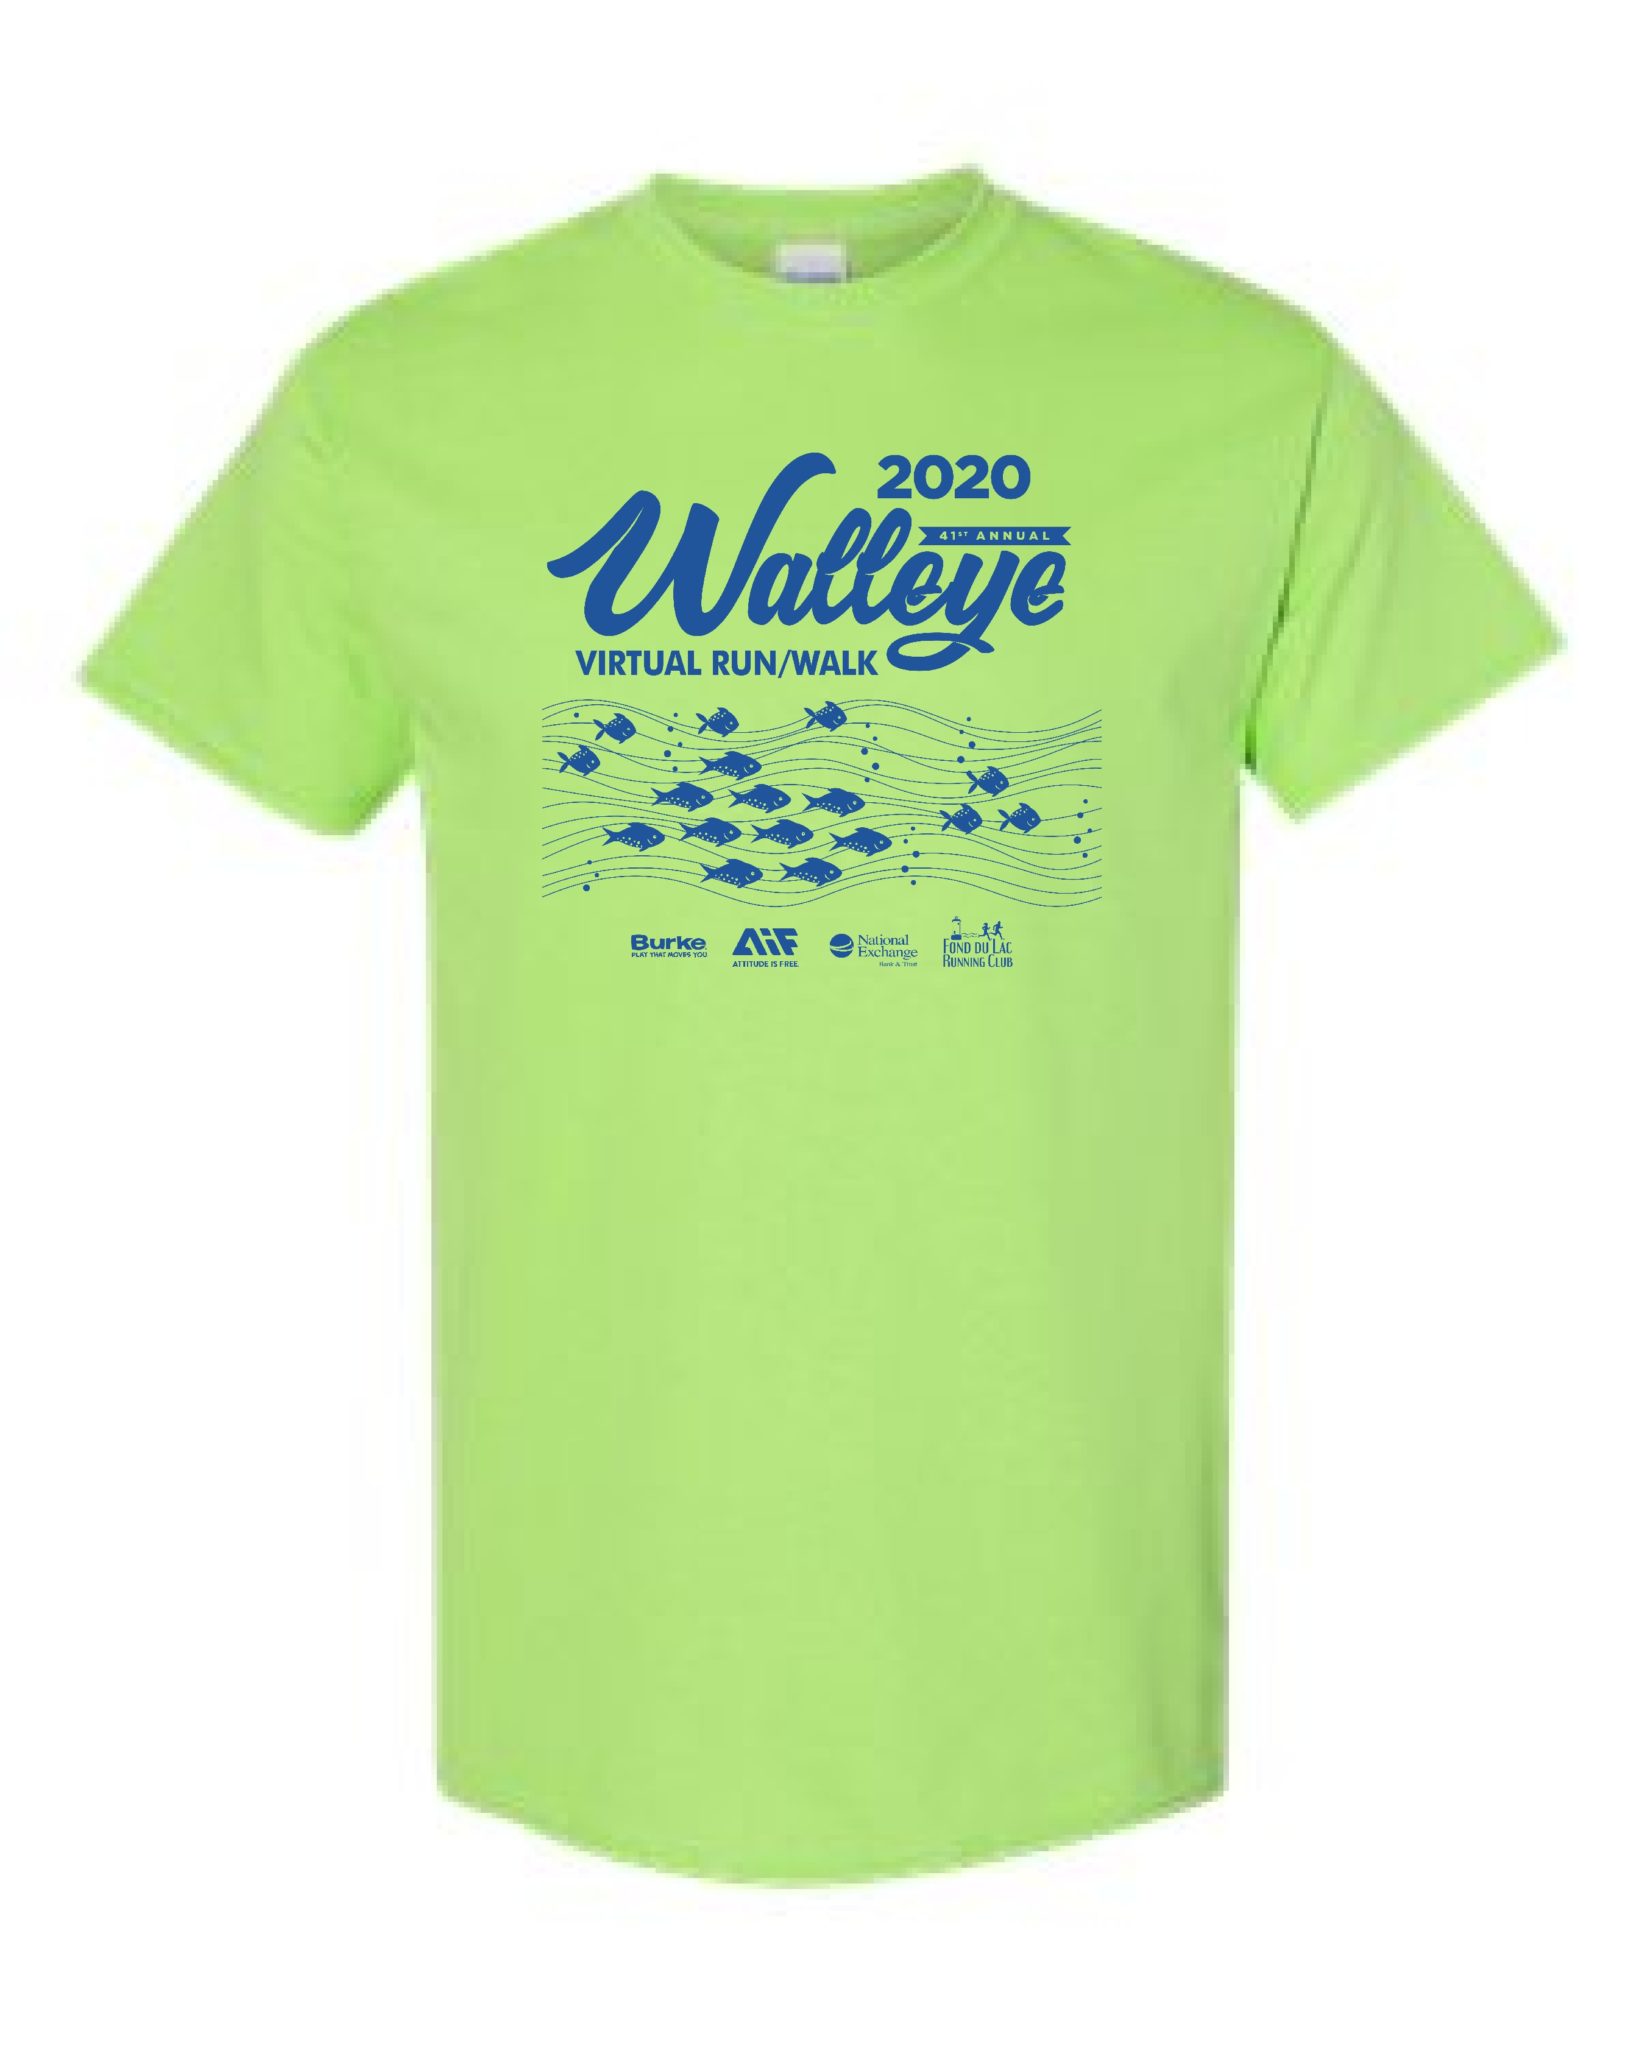 Virtual Walleye Run/Walk Walleye Weekend